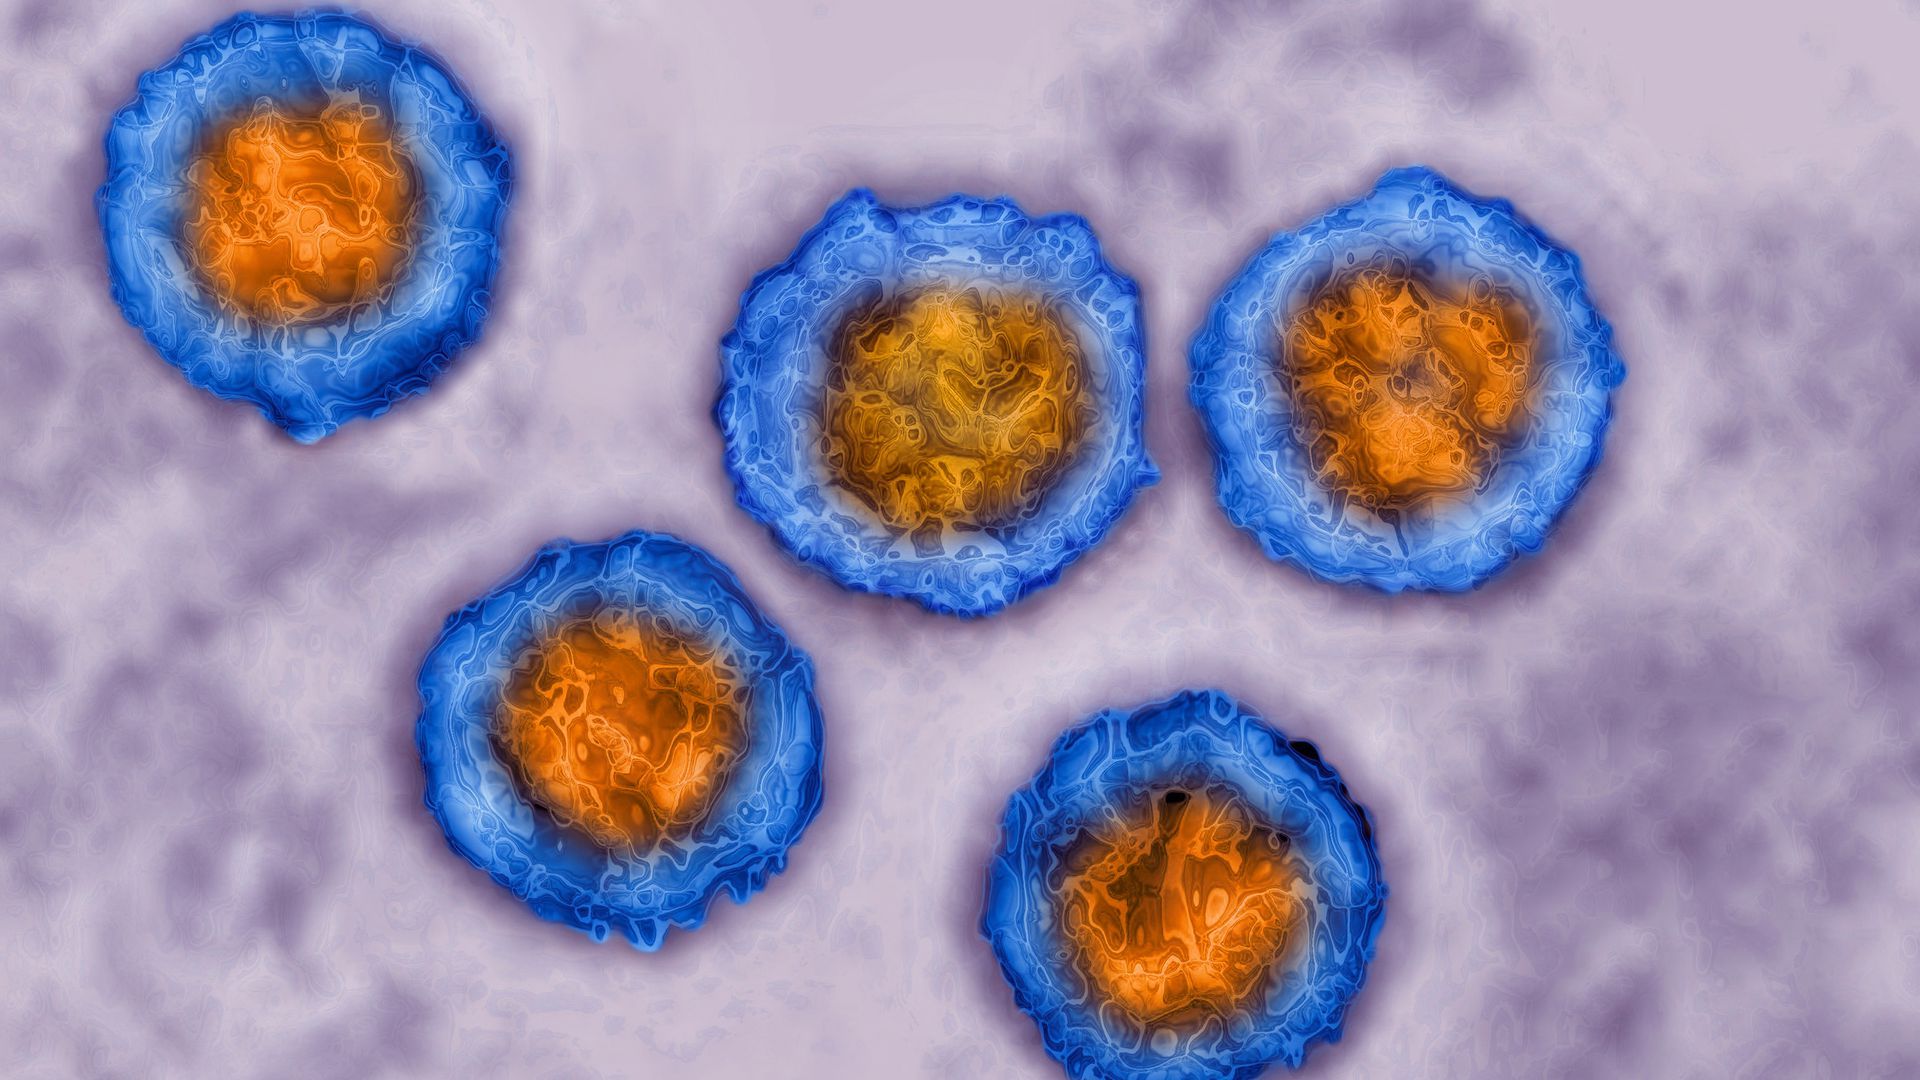 Human herpes virus taken with transmission electron microscopy. 